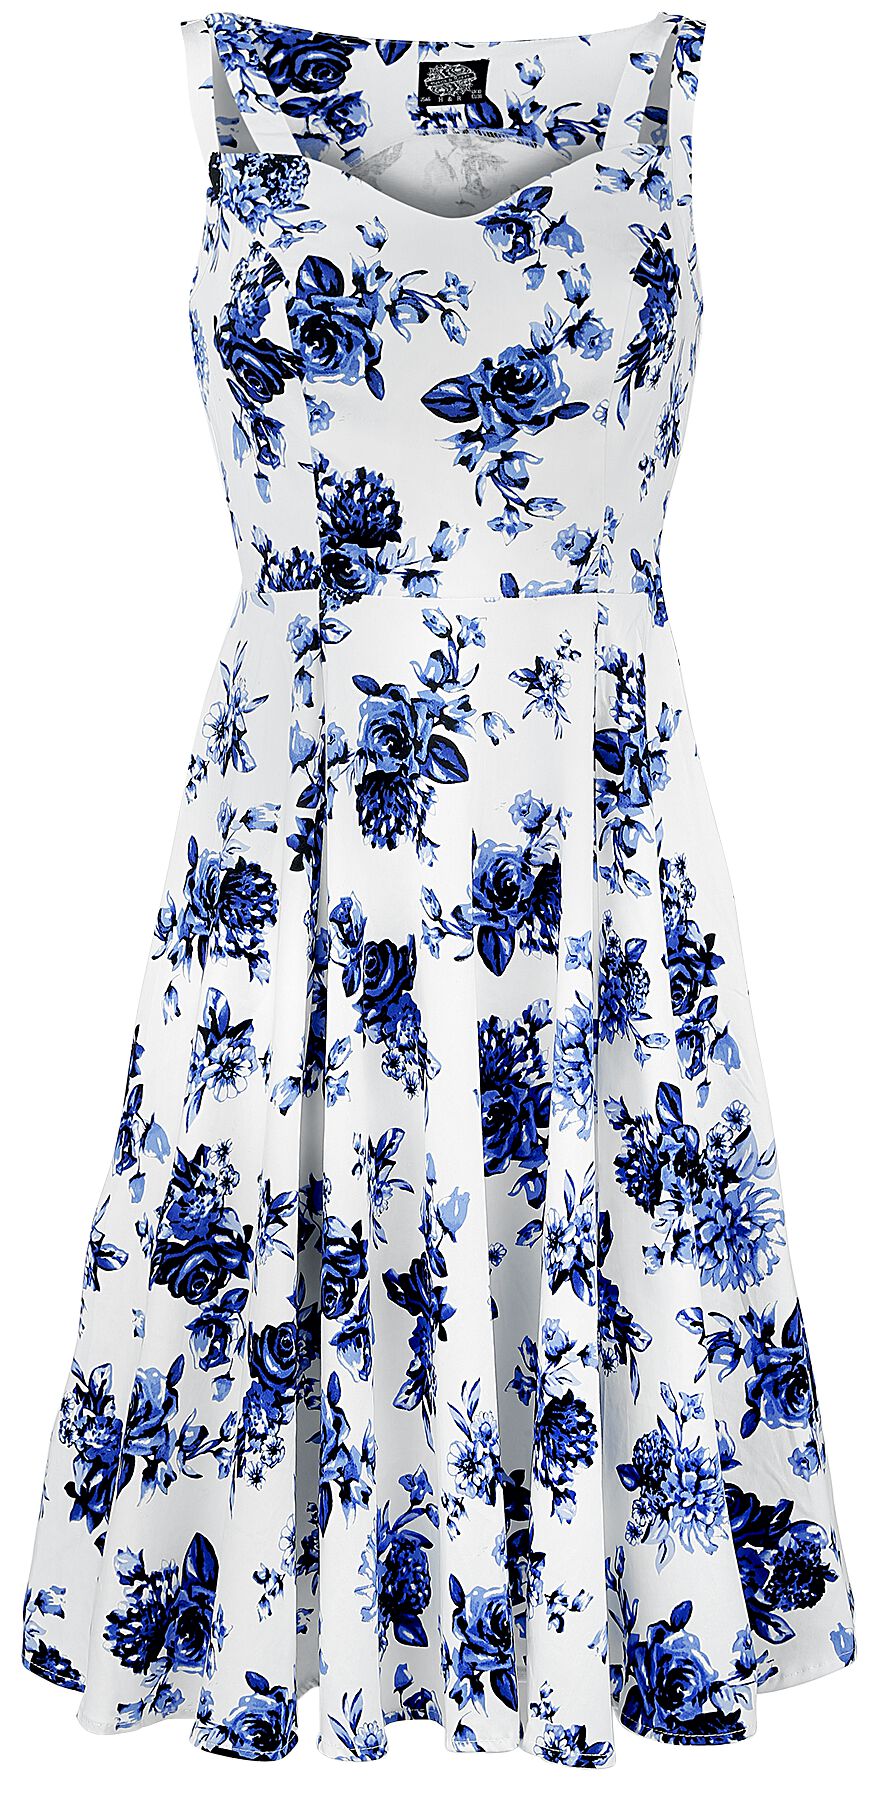 H&R London - Rockabilly Kleid knielang - Blue Rosaceae Swing Dress - S bis 3XL - für Damen - Größe S - multicolor